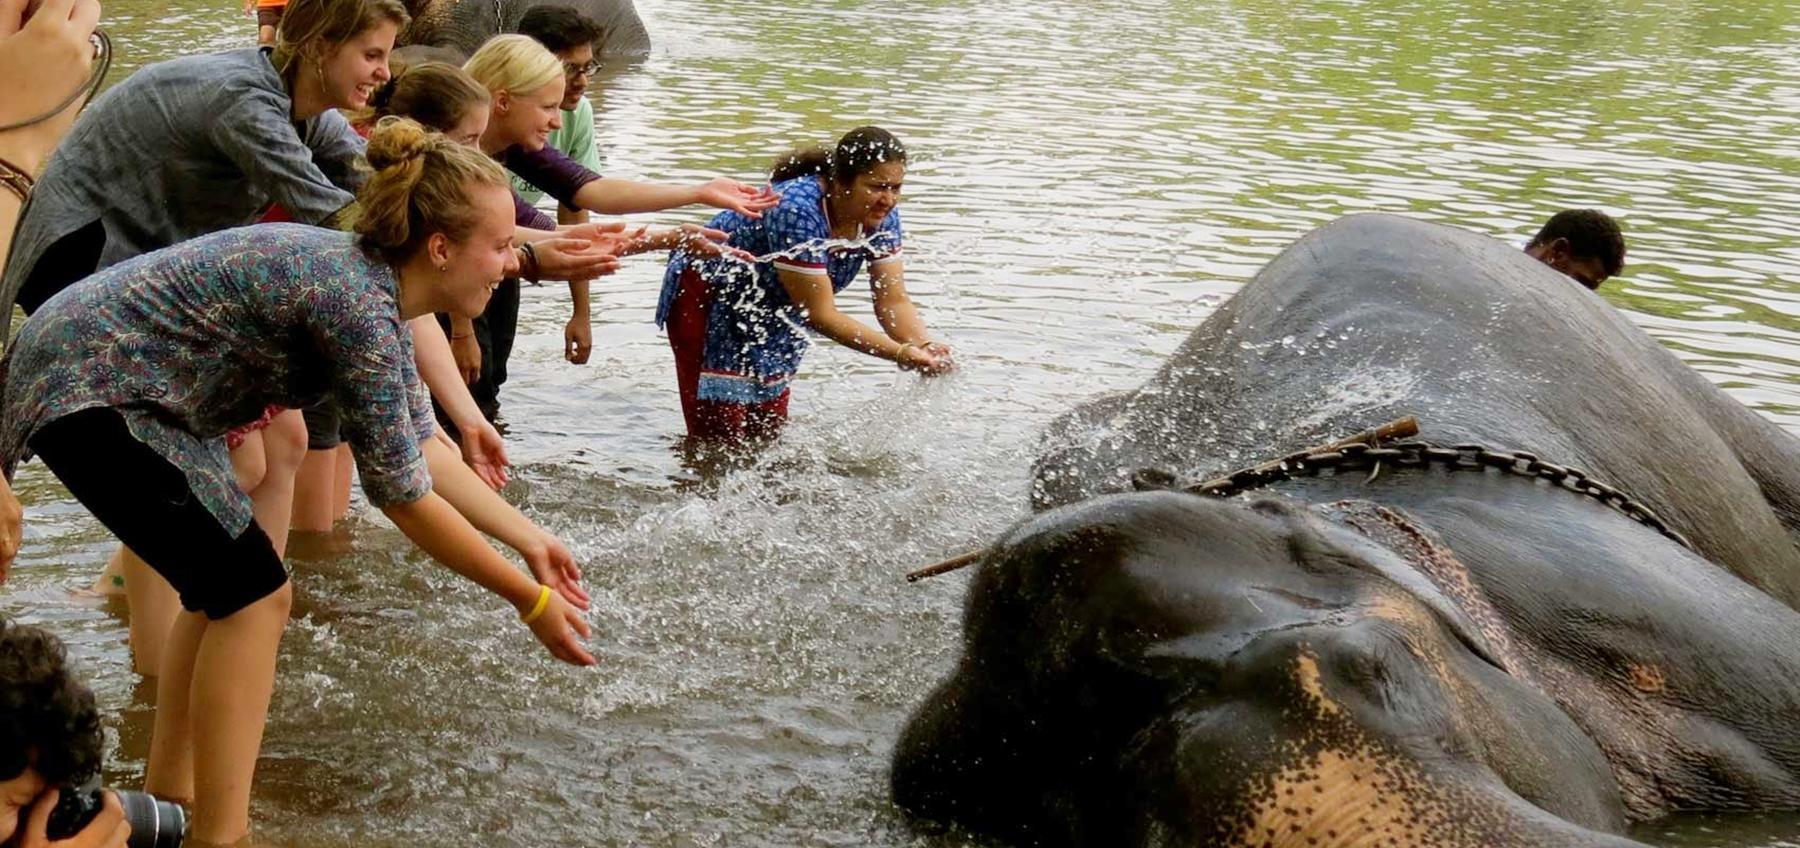 Elephant Rides in Kerala